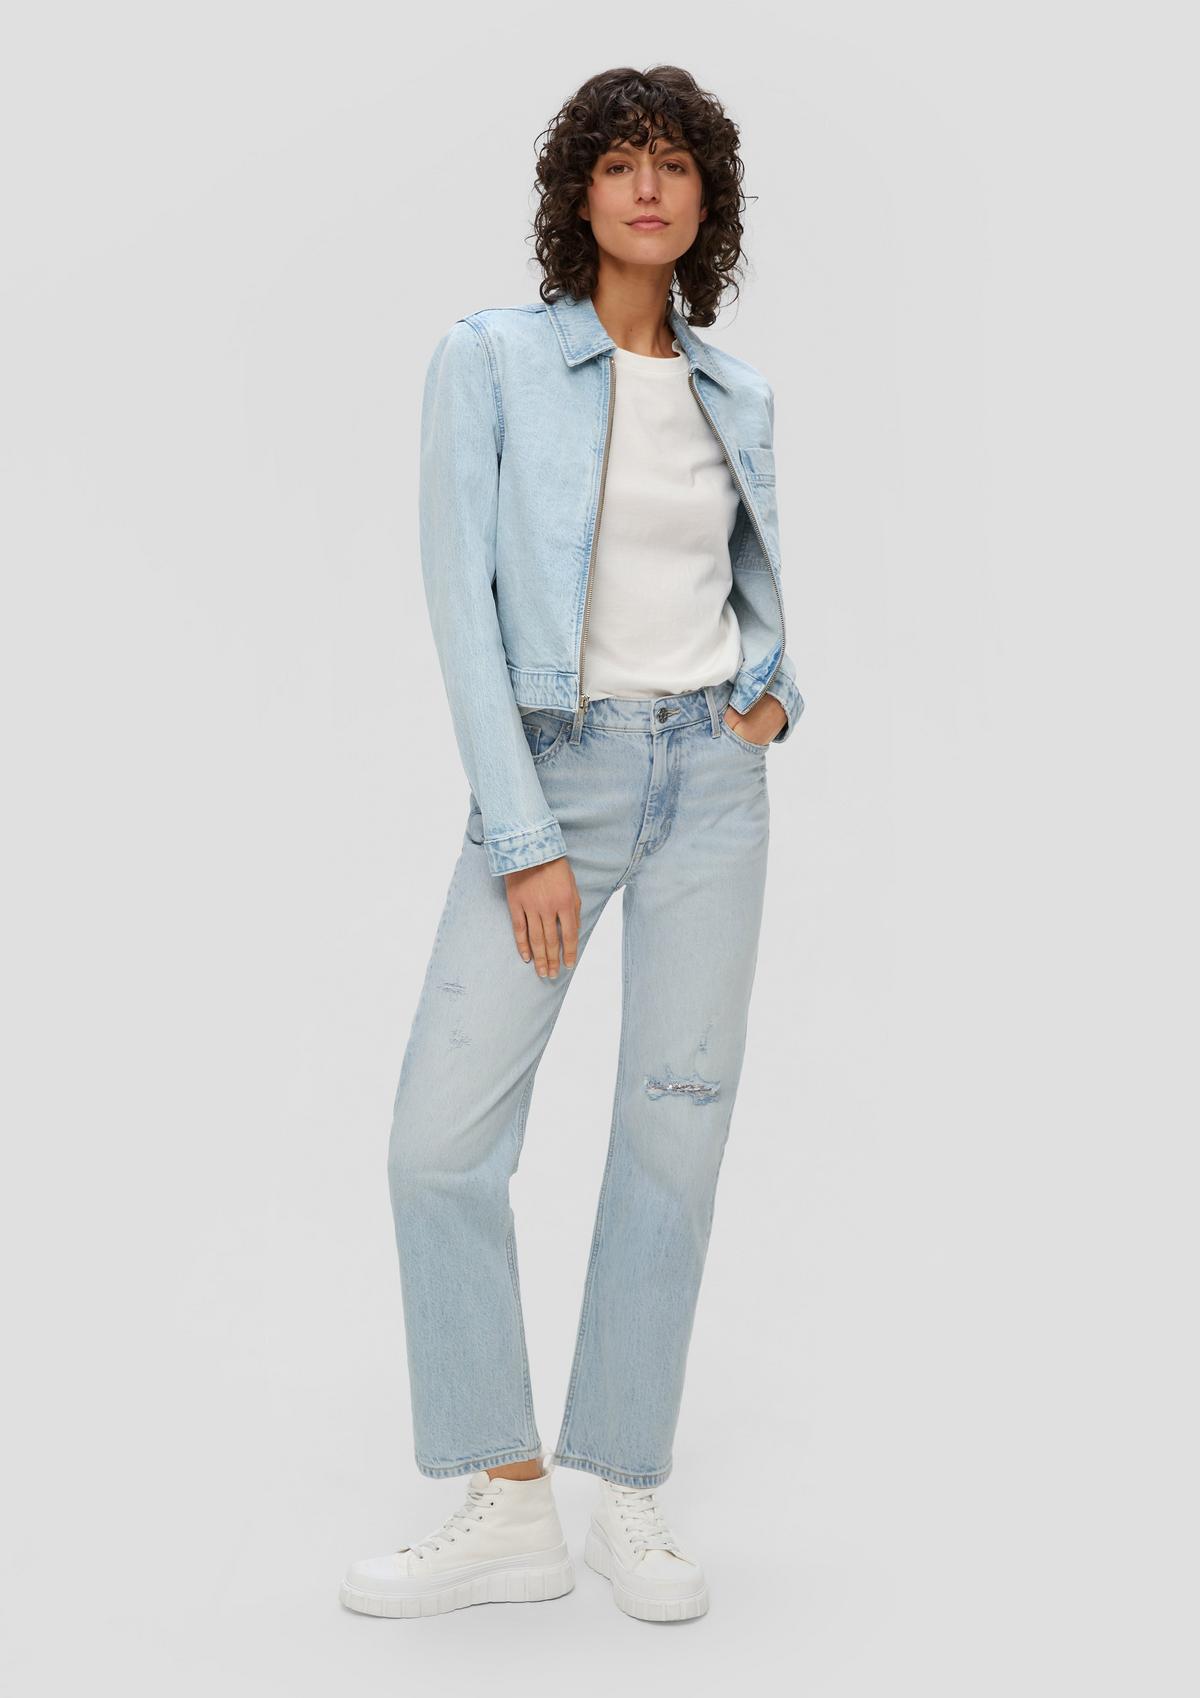 Karolin cropped jeans / regular fit / high rise / straight leg / sequin detail